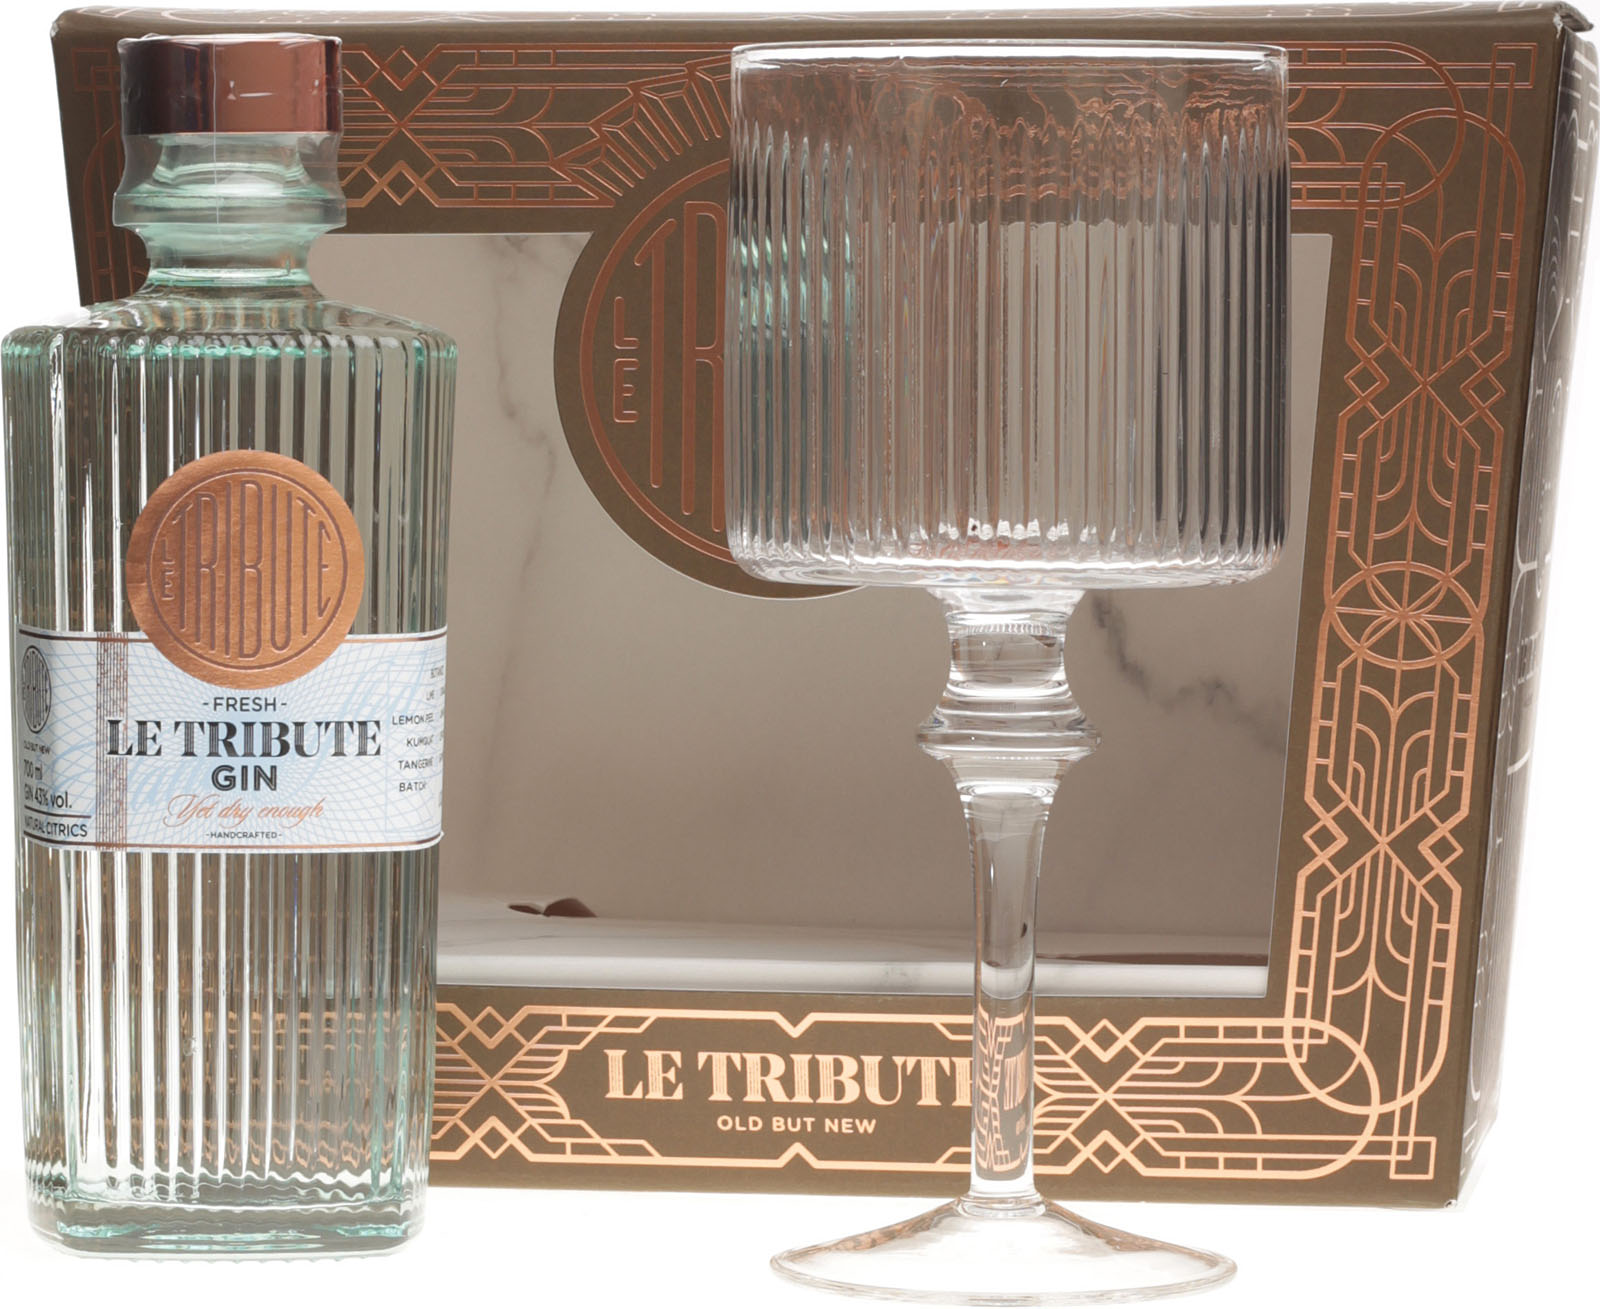 https://www.spirituosen-superbillig.com/pic/Le-Tribute-Gin-Set-mit-1-Copa-Glas-0-7-Liter-43-Vol-.13590a.jpg